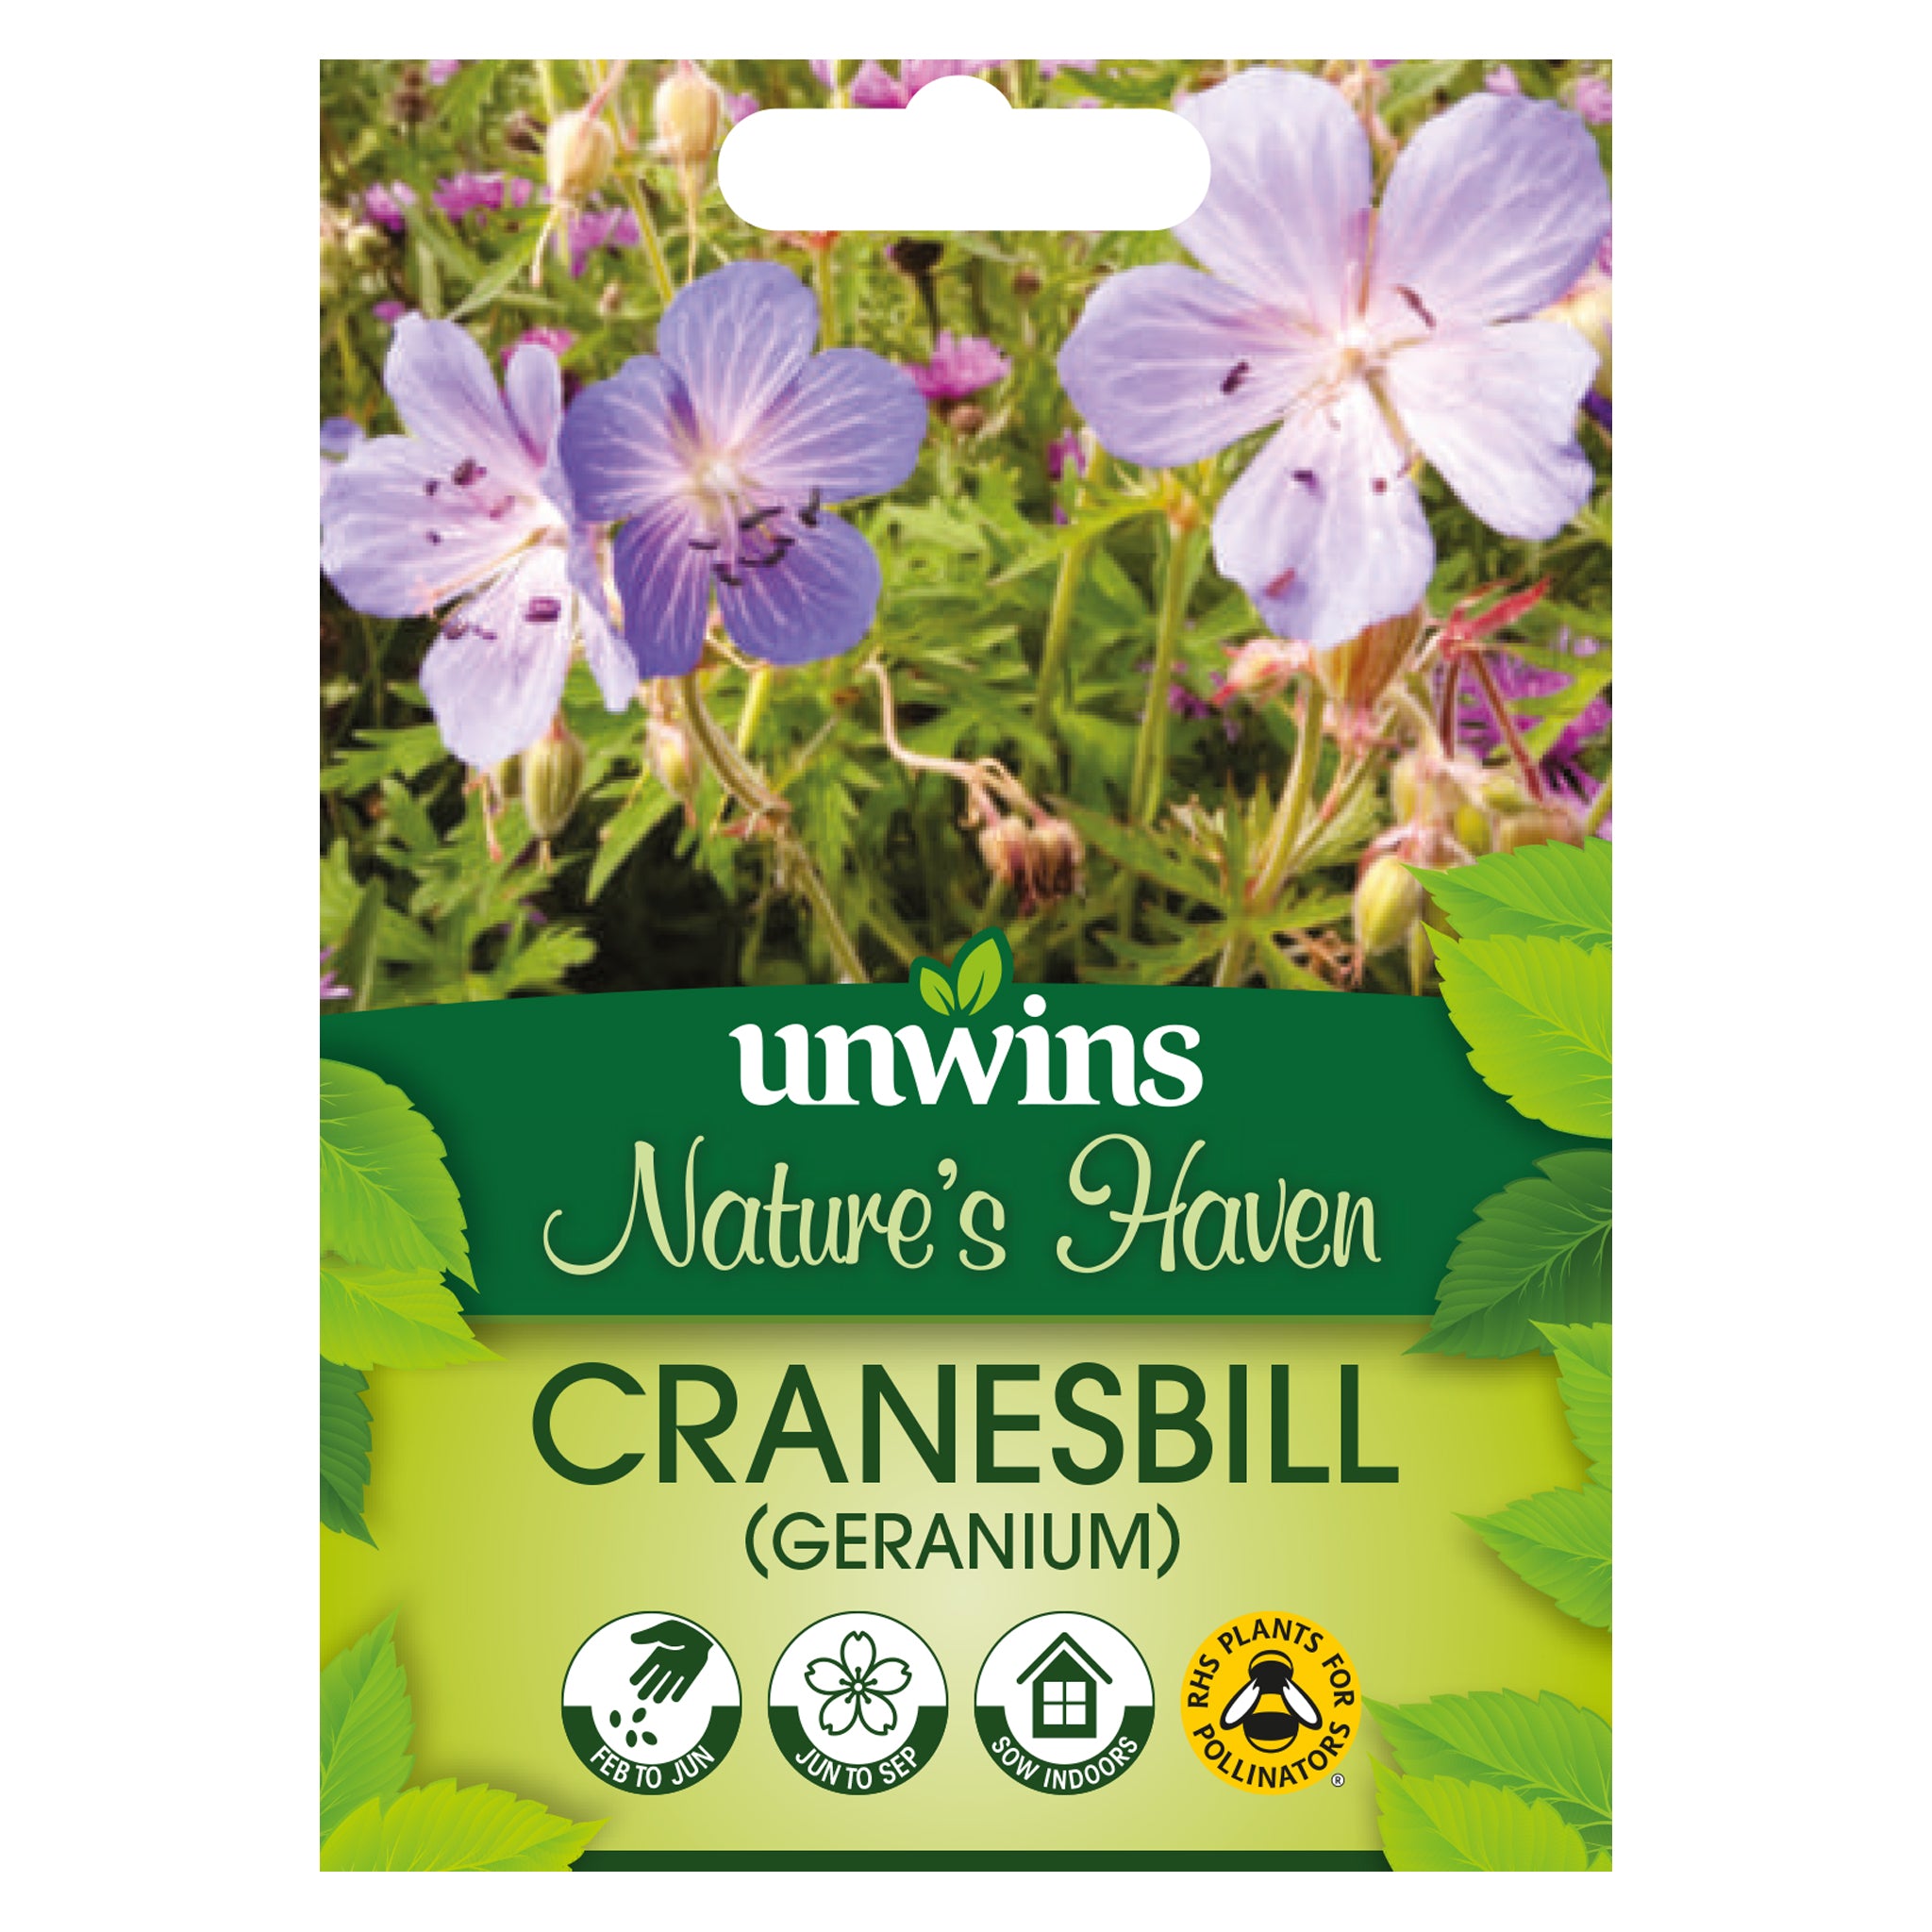 Nature's Haven Cranesbill Geranium Seeds